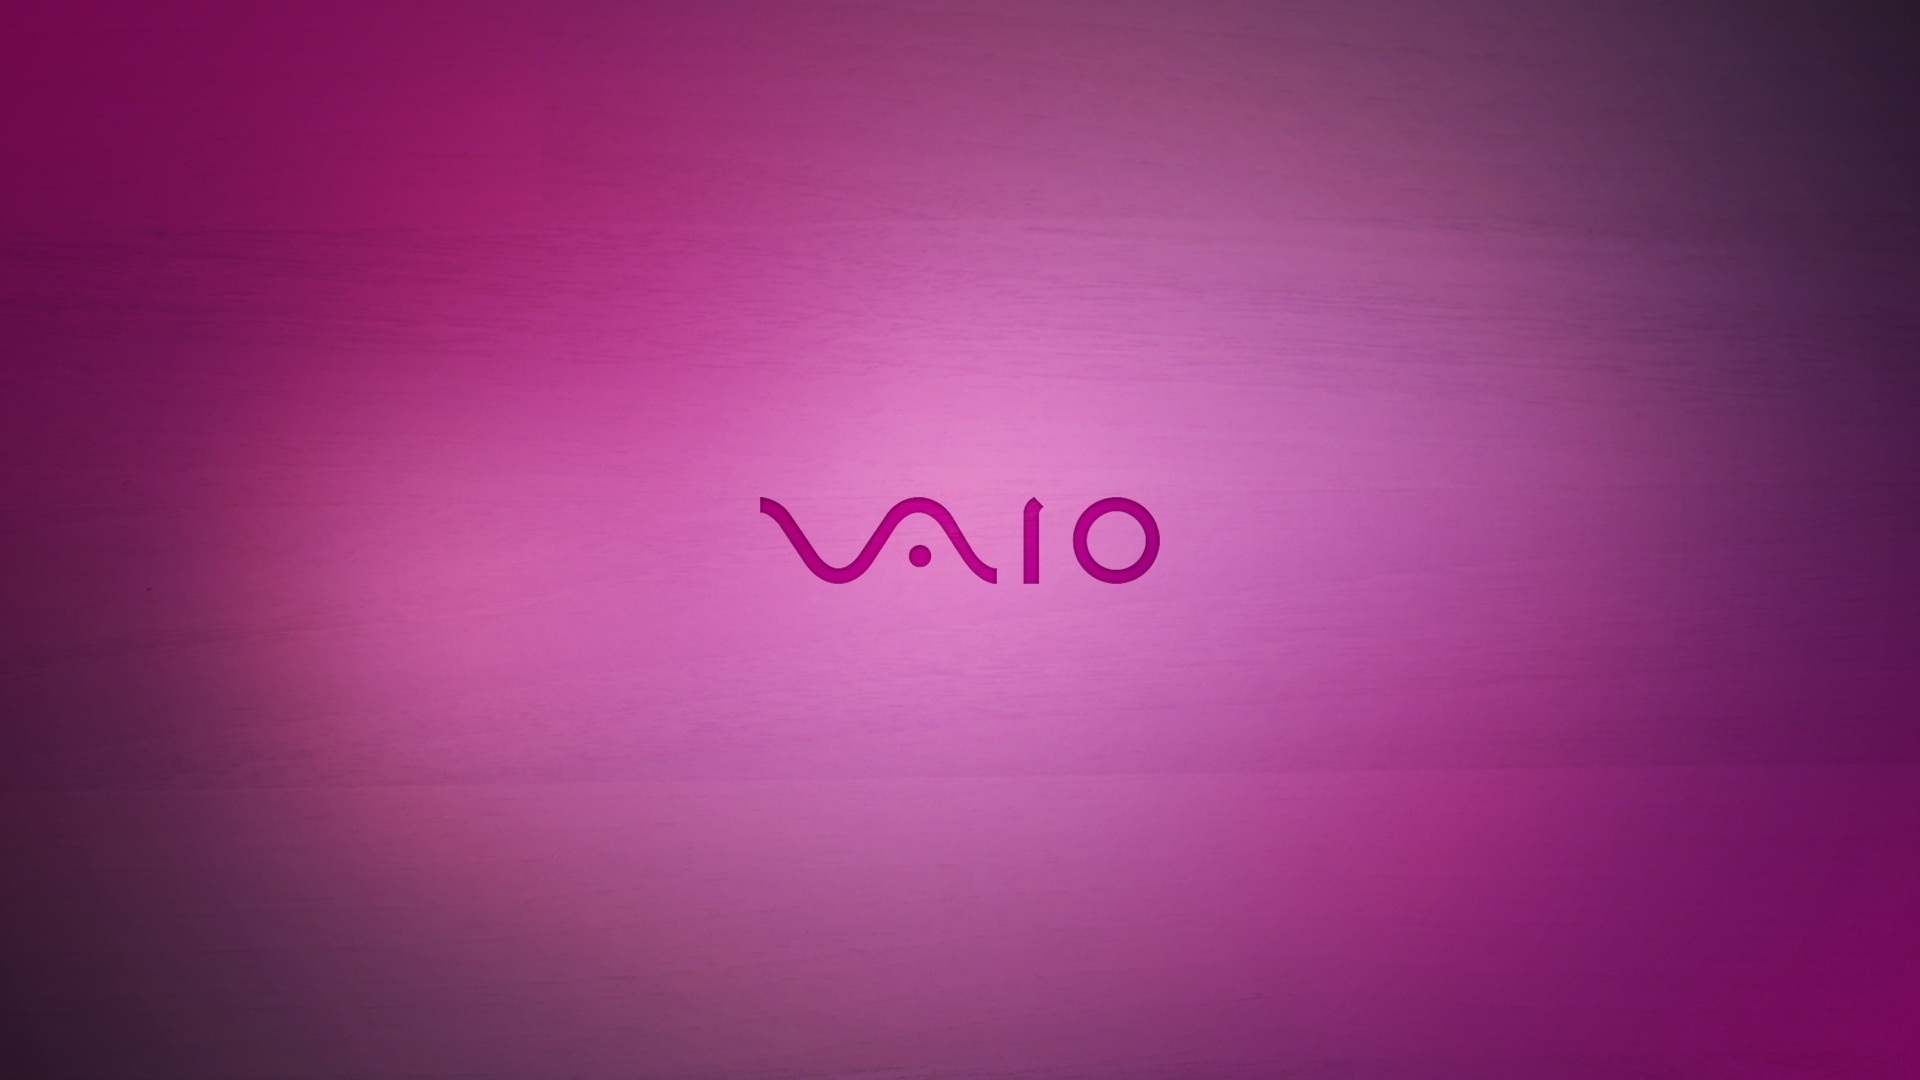 Vaio Purple Wood for 1920 x 1080 HDTV 1080p resolution